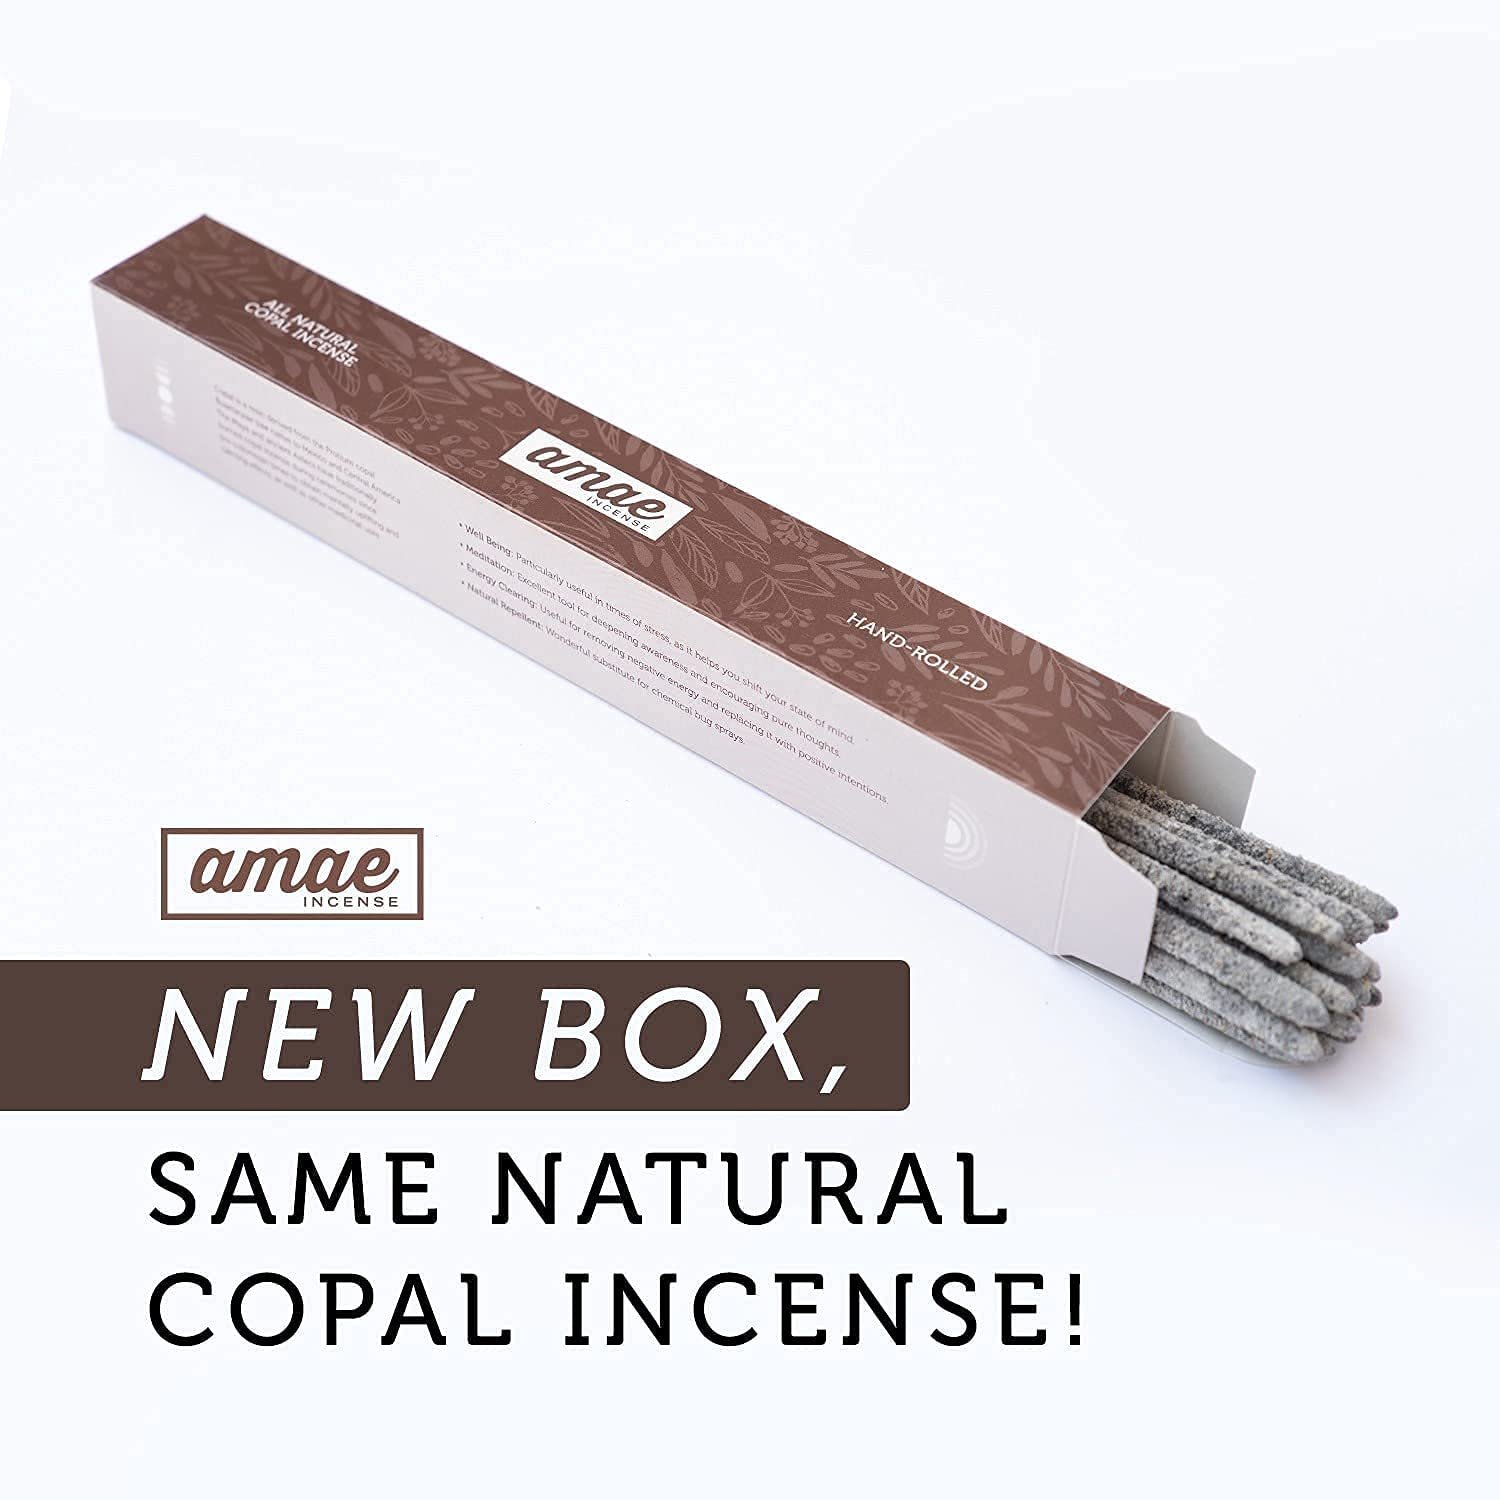 Copal Incense 40 Sticks: Helps with anxiety & depression, meditation (Copy) (Copy) (Copy) (Copy)